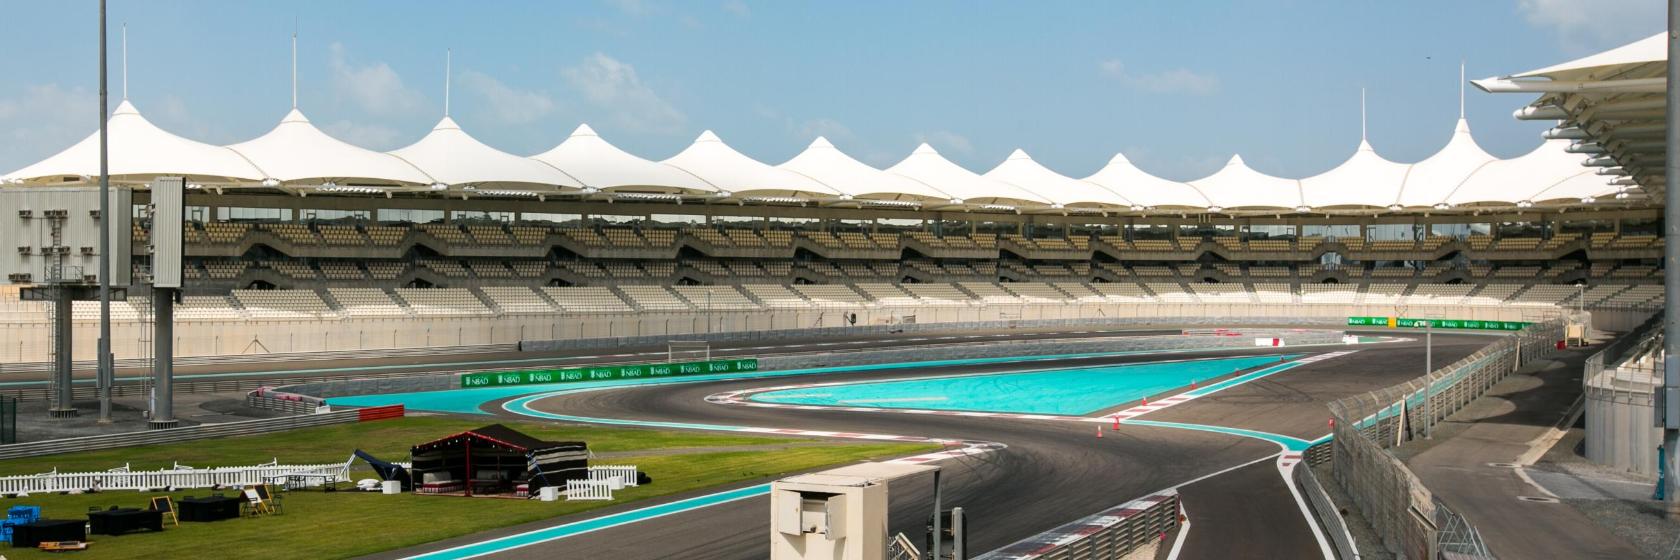 The 10 best hotels near Yas Marina Formula 1 Circuit in Abu Dhabi, United  Arab Emirates